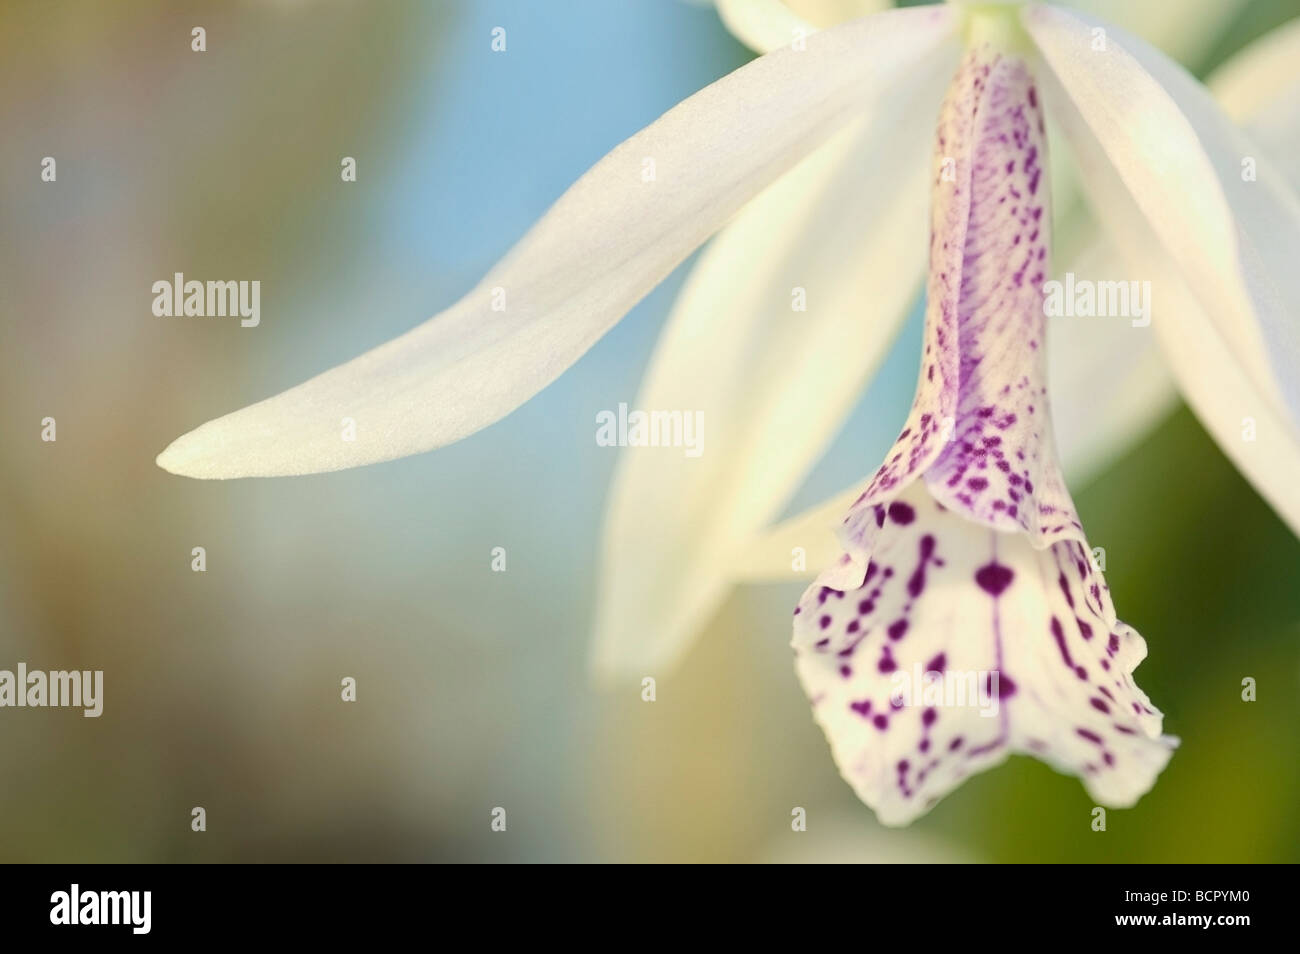 Laelia cattleya Orchid Stock Photo